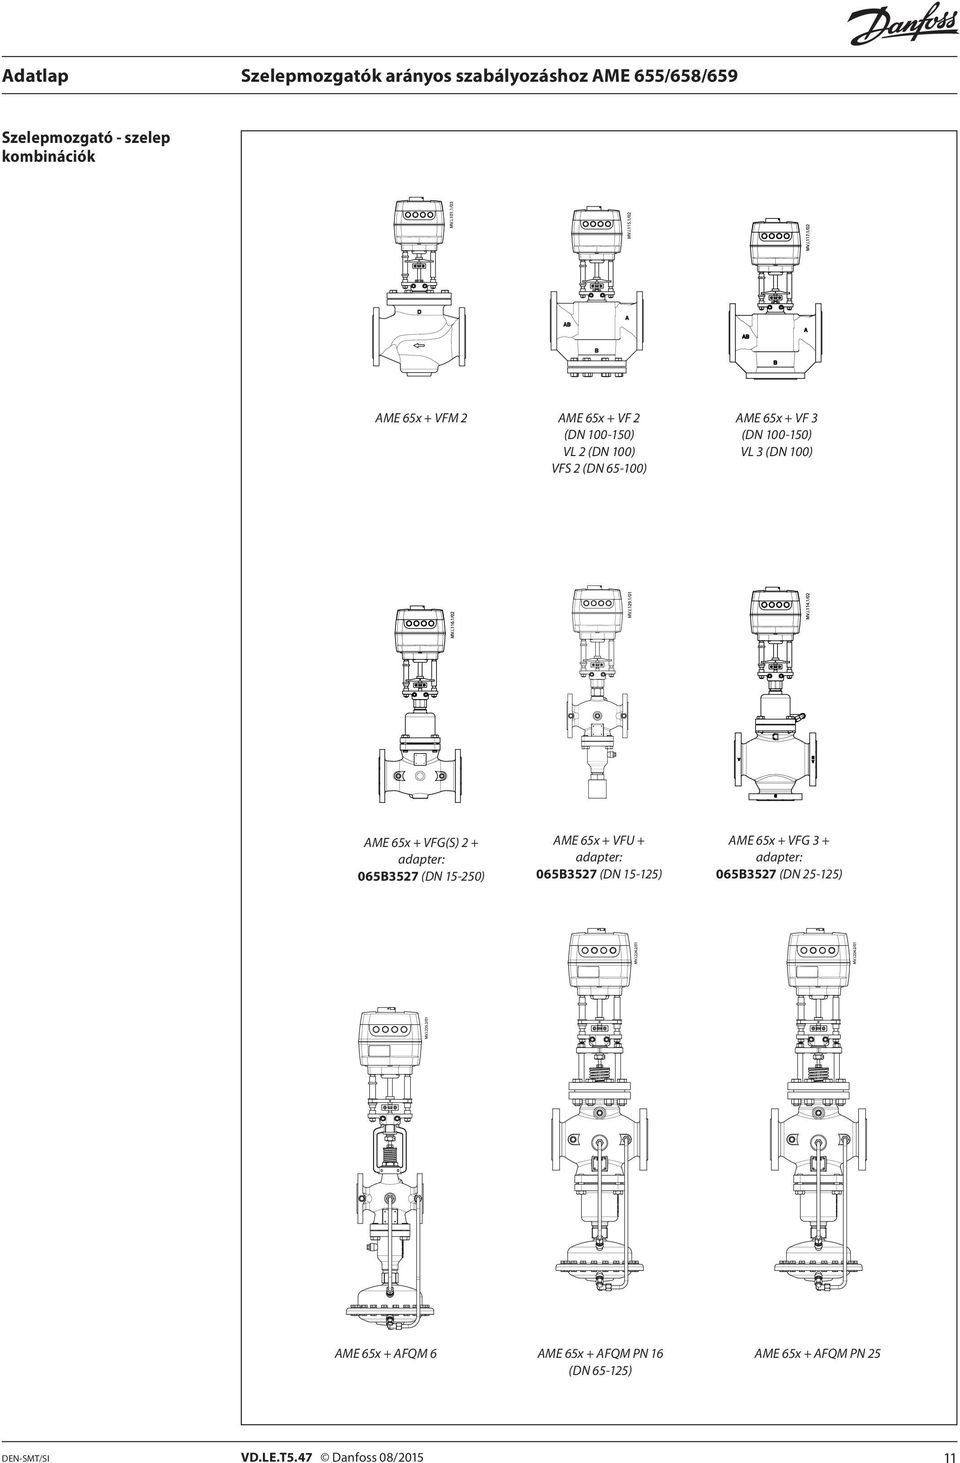 AME 65x + VFU + adapter: 065B3527 (DN 15-125) AME 65x + VFG 3 + adapter: 065B3527 (DN 25-125) AME 65x